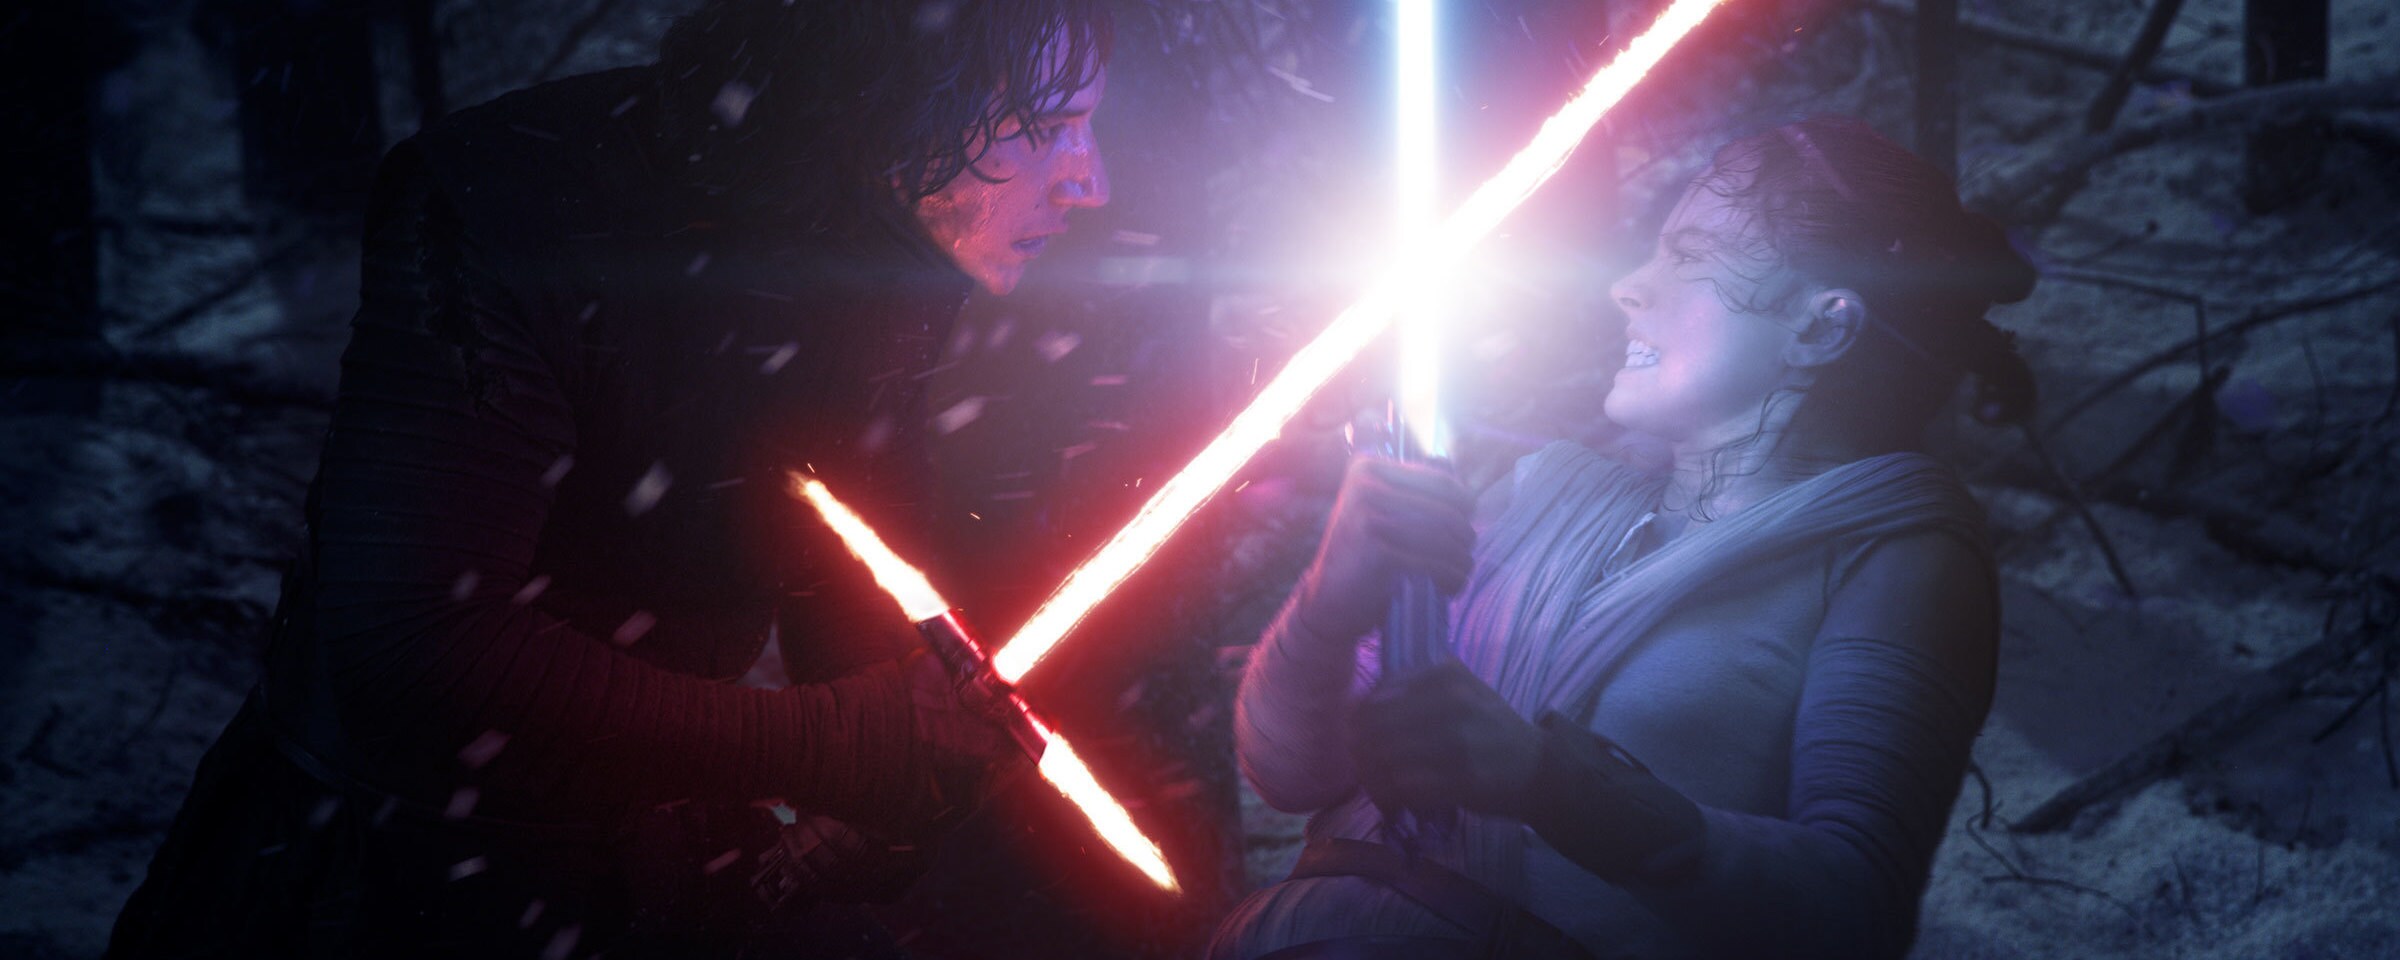 Kylo Ren fights Rey in a lightsaber duel.